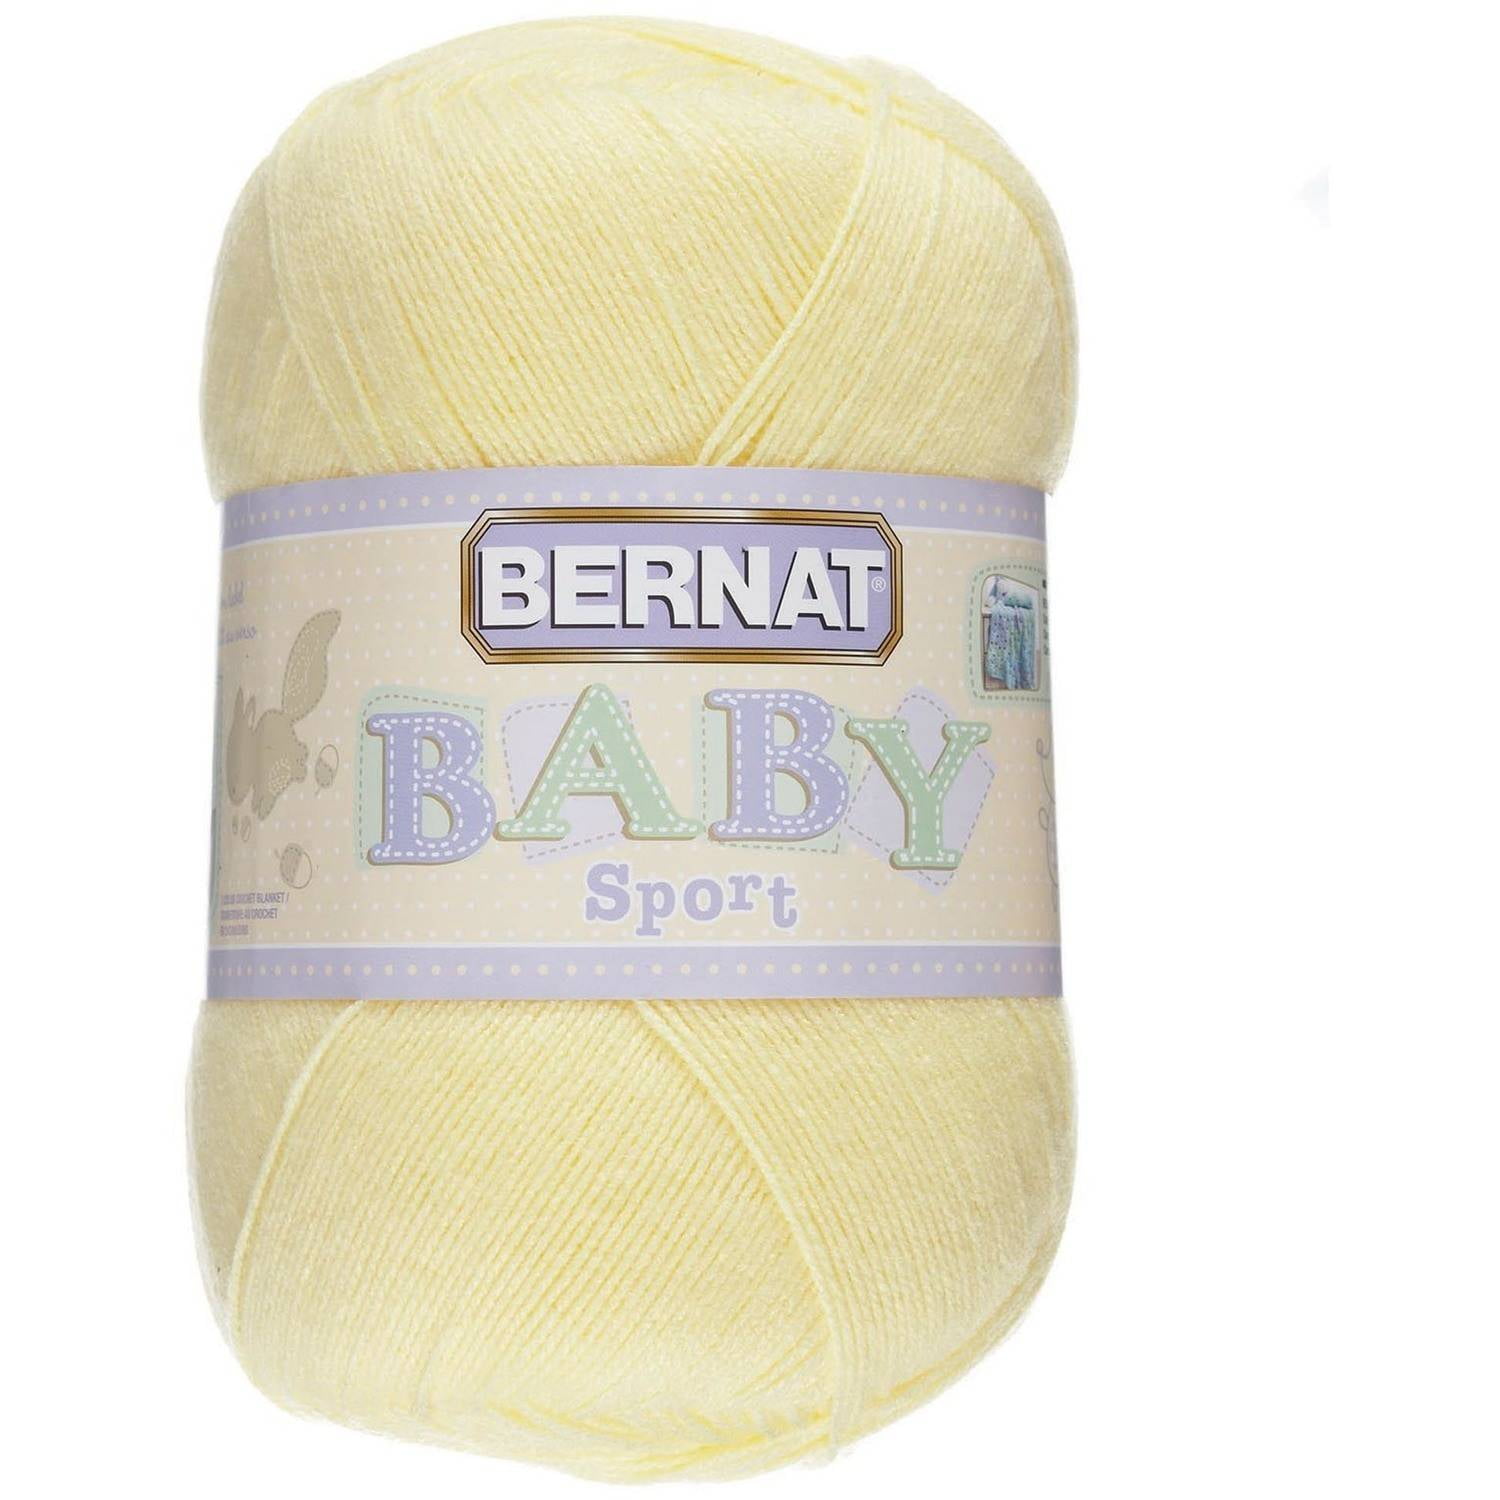 Bernat Baby Sport #3 Light Acrylic Yarn, Baby Yellow 10.5oz/300g, 1077 Yards